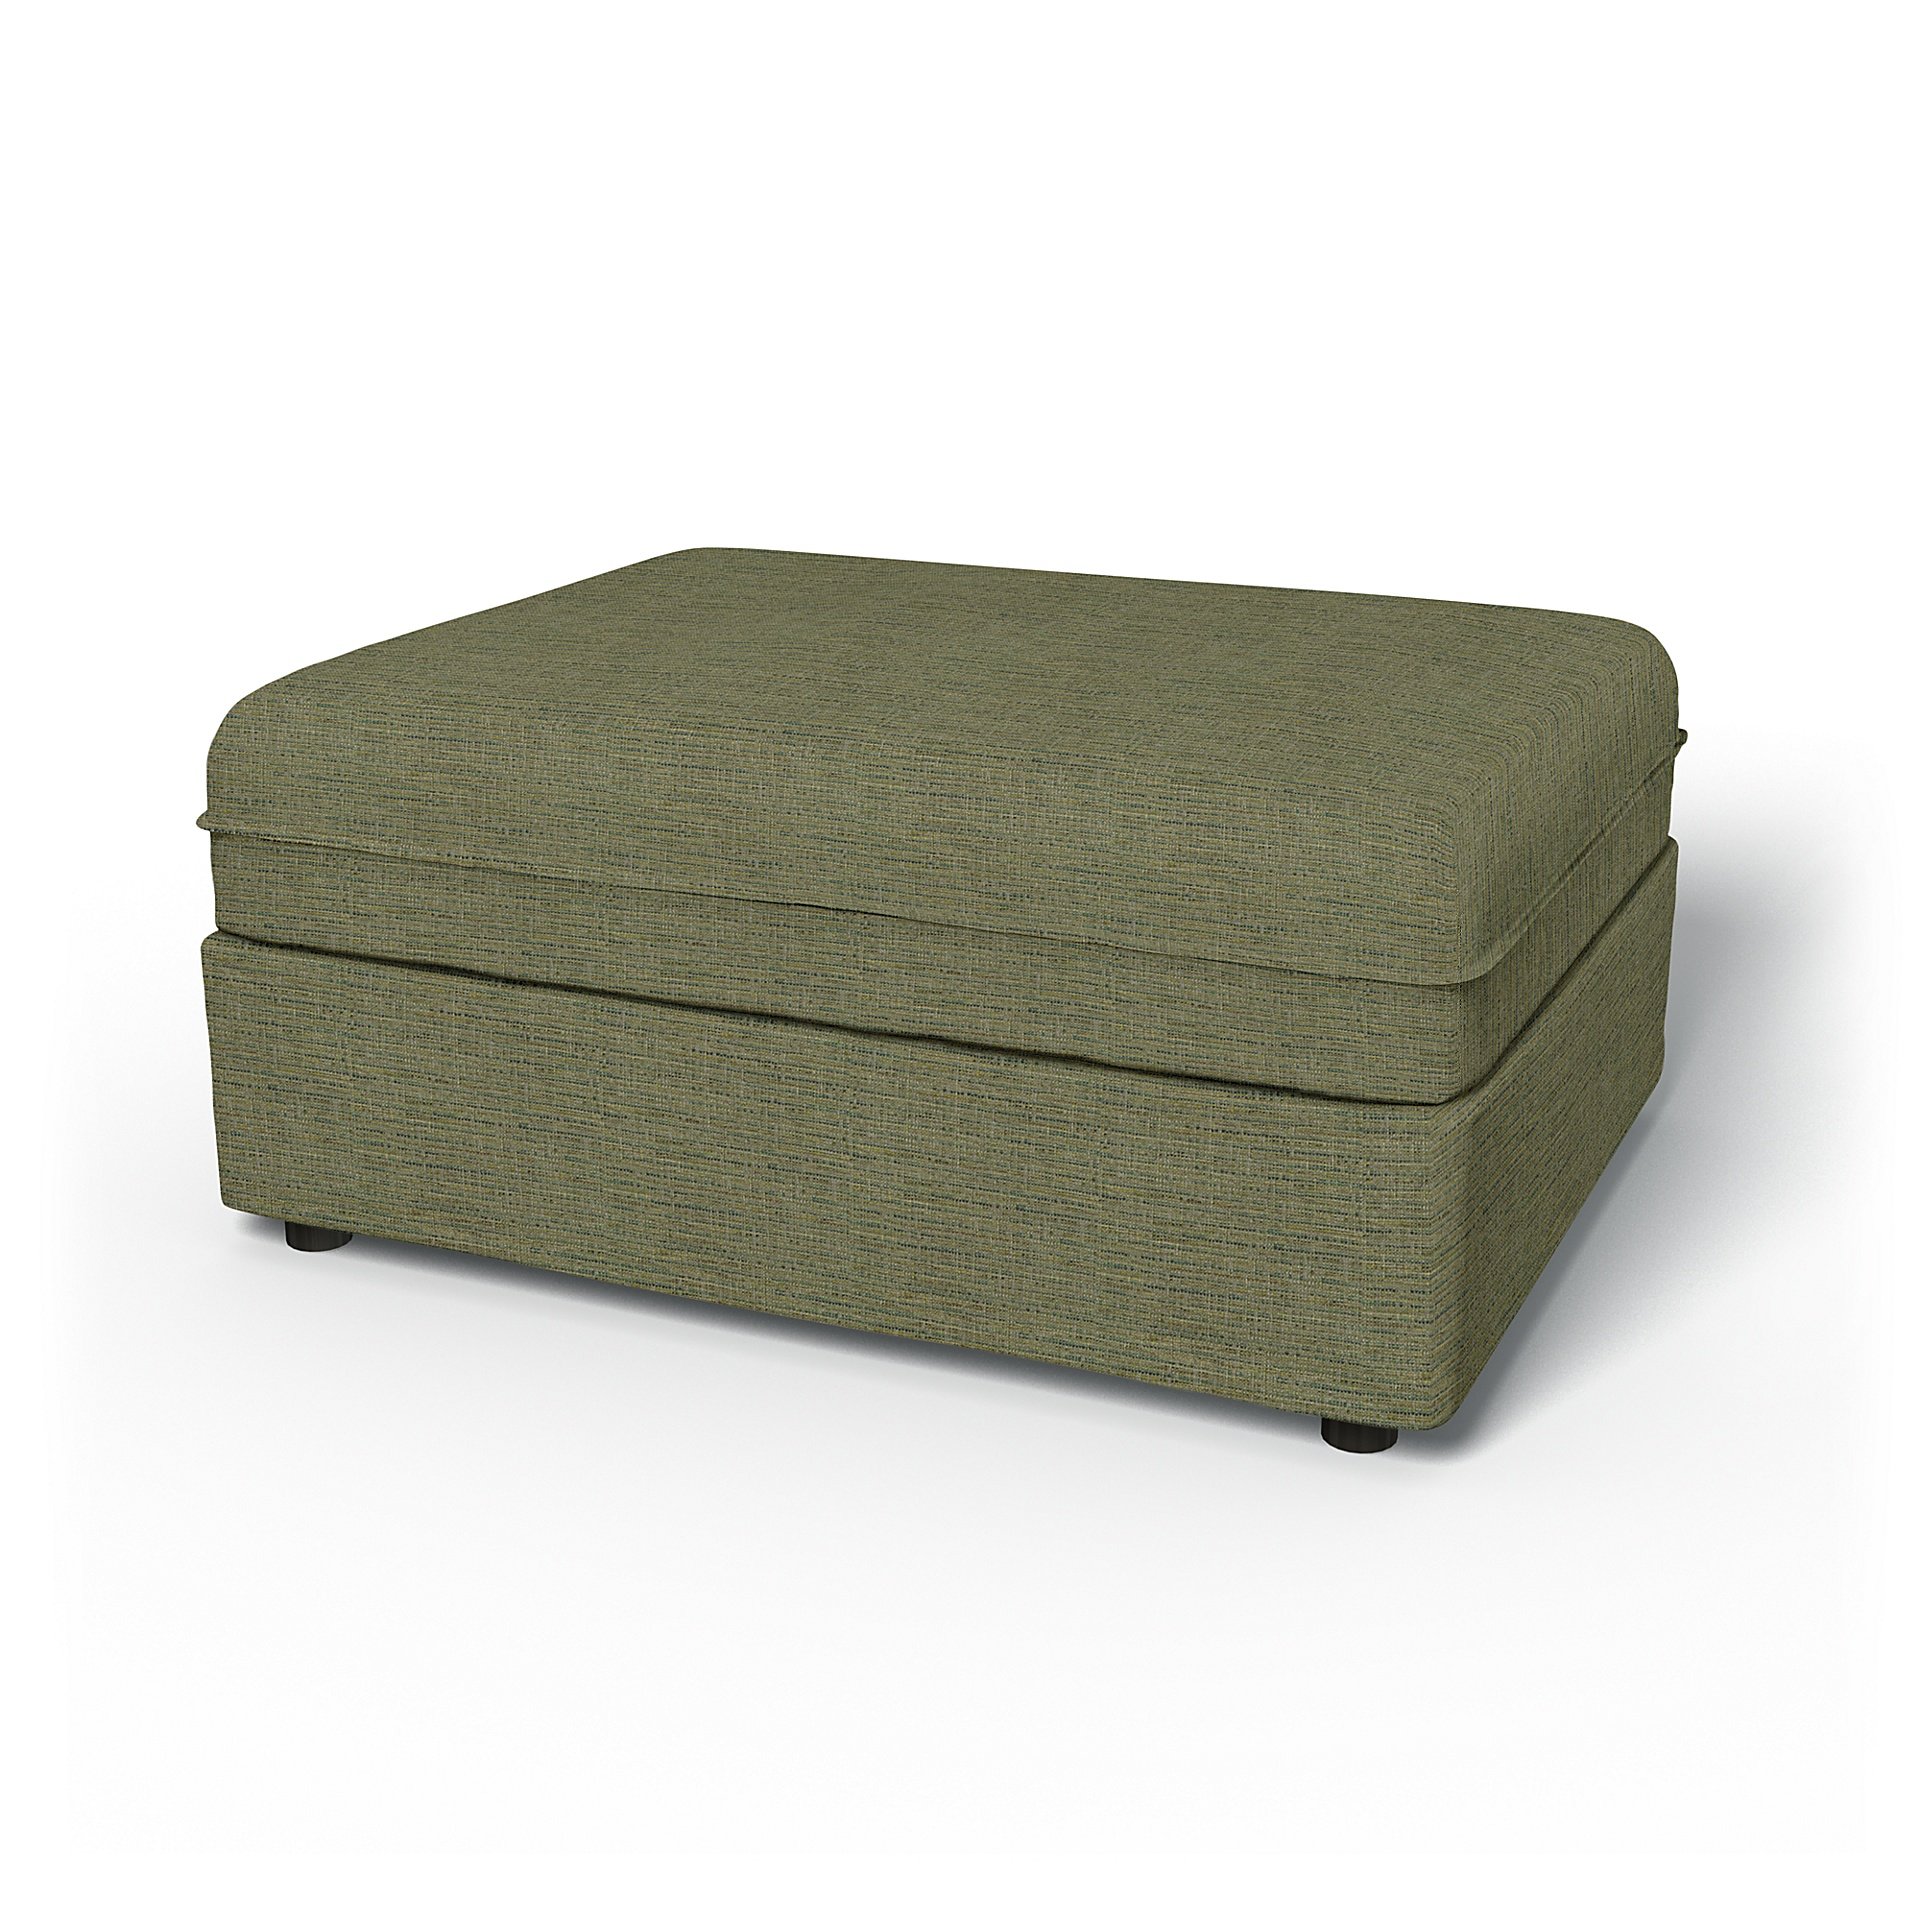 IKEA - Vallentuna Seat Module Cover 100x80cm 39x32in, Meadow Green, Boucle & Texture - Bemz